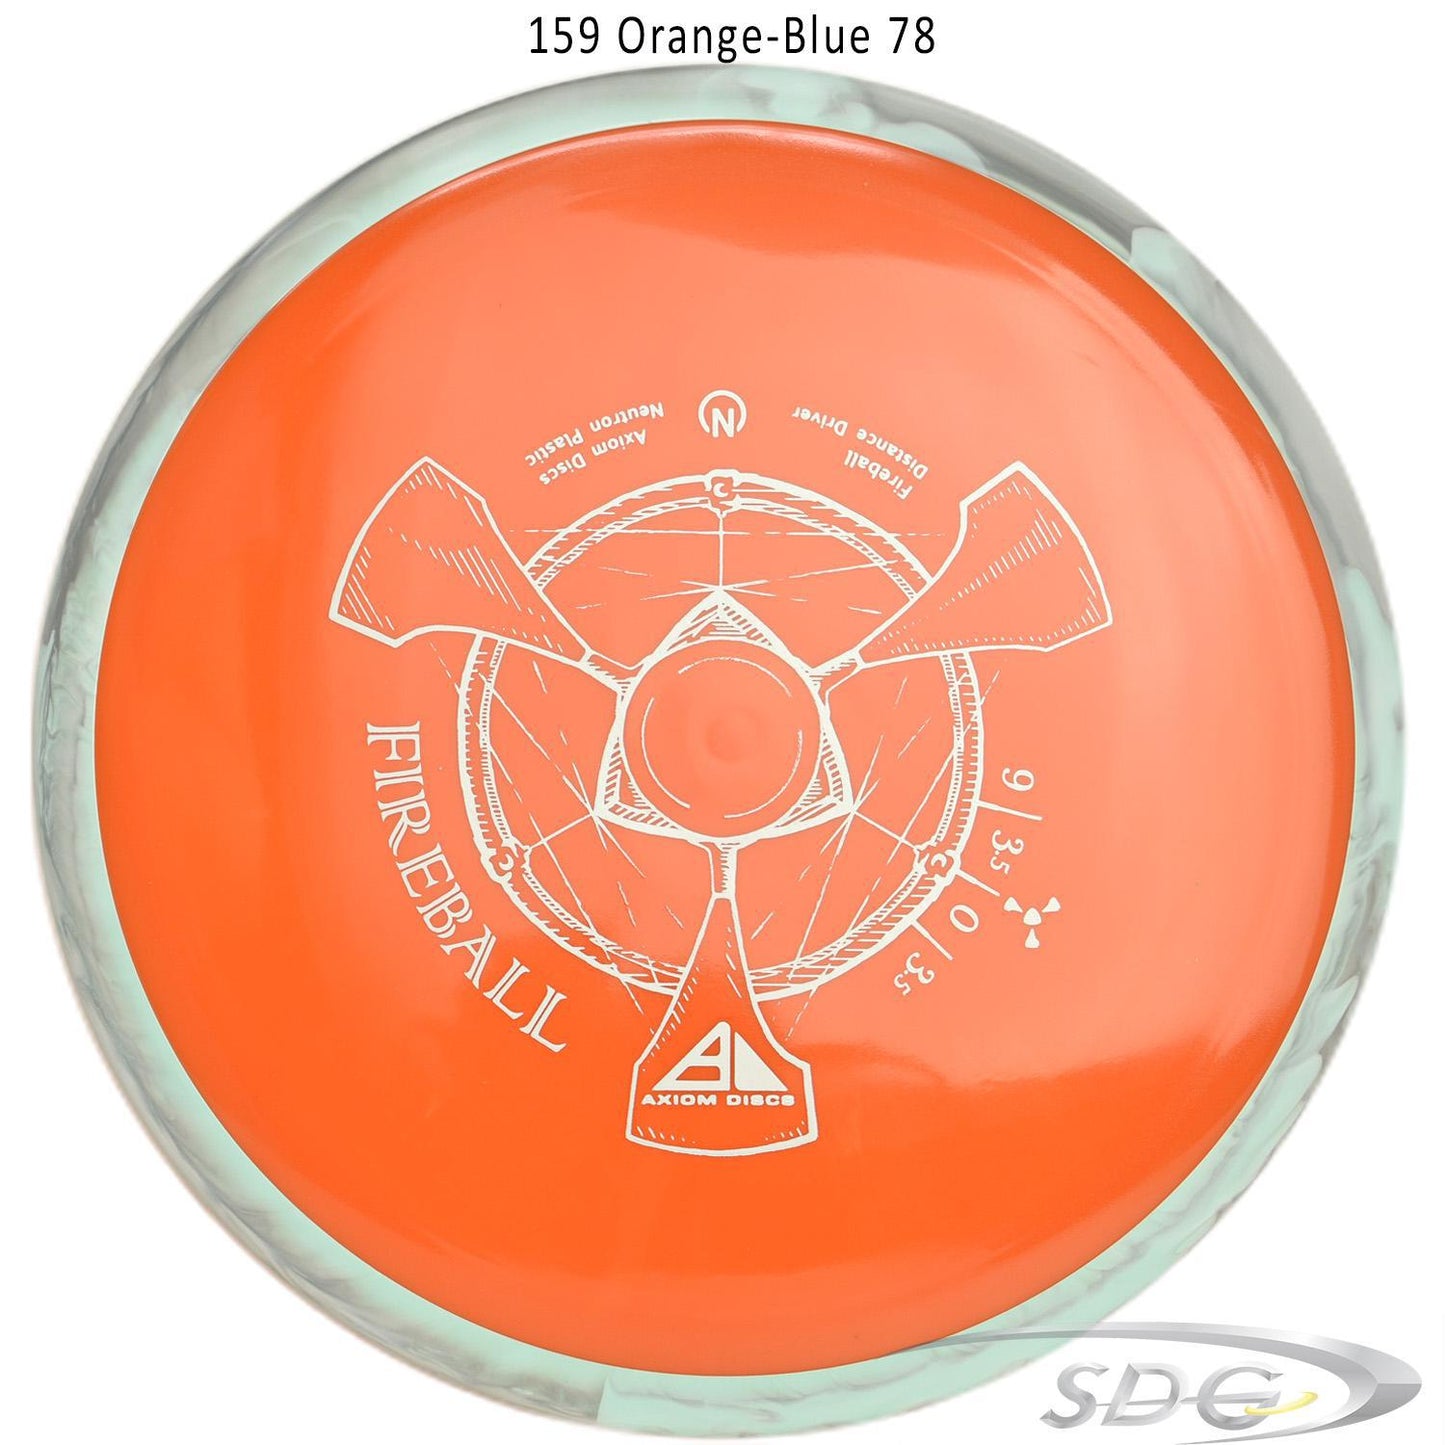 axiom-neutron-fireball-disc-golf-distance-driver 159 Orange-Blue 78 